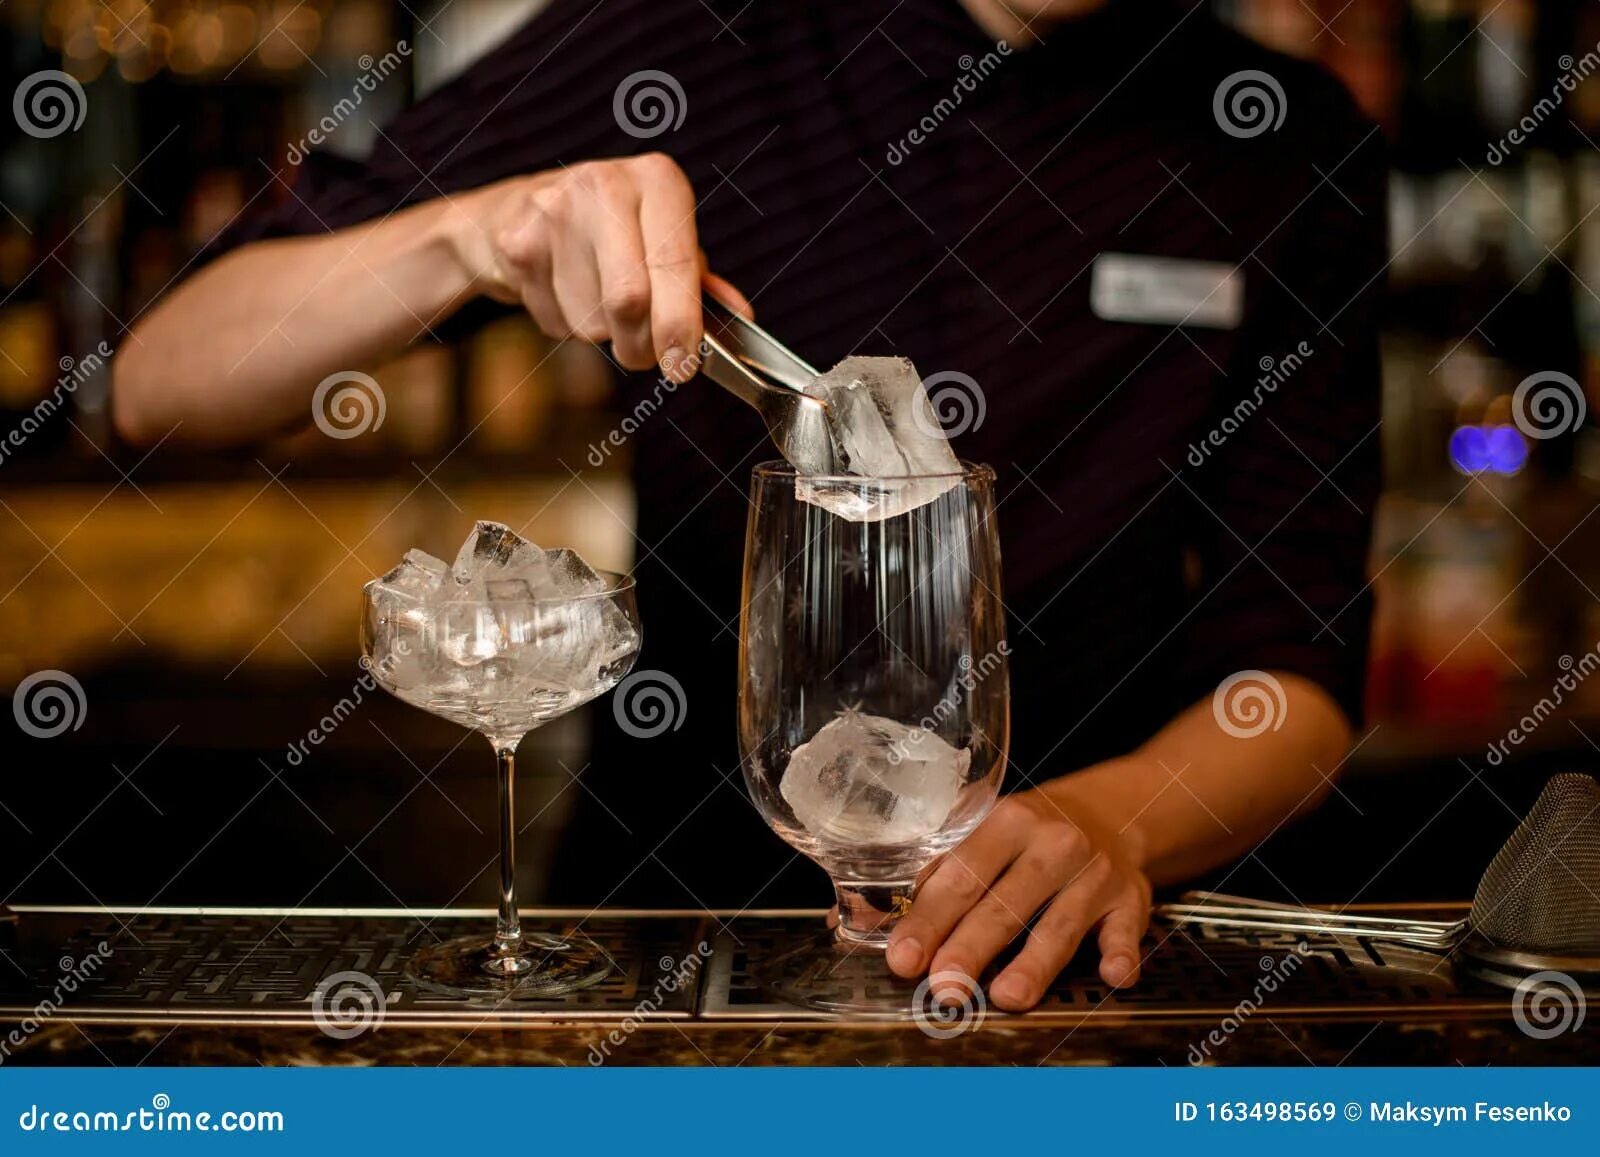 Бармен бокал бога манга. Бокалы бармена. Бармен стакан лёд. Стакан бармена. Бармен налей пустой стакан.